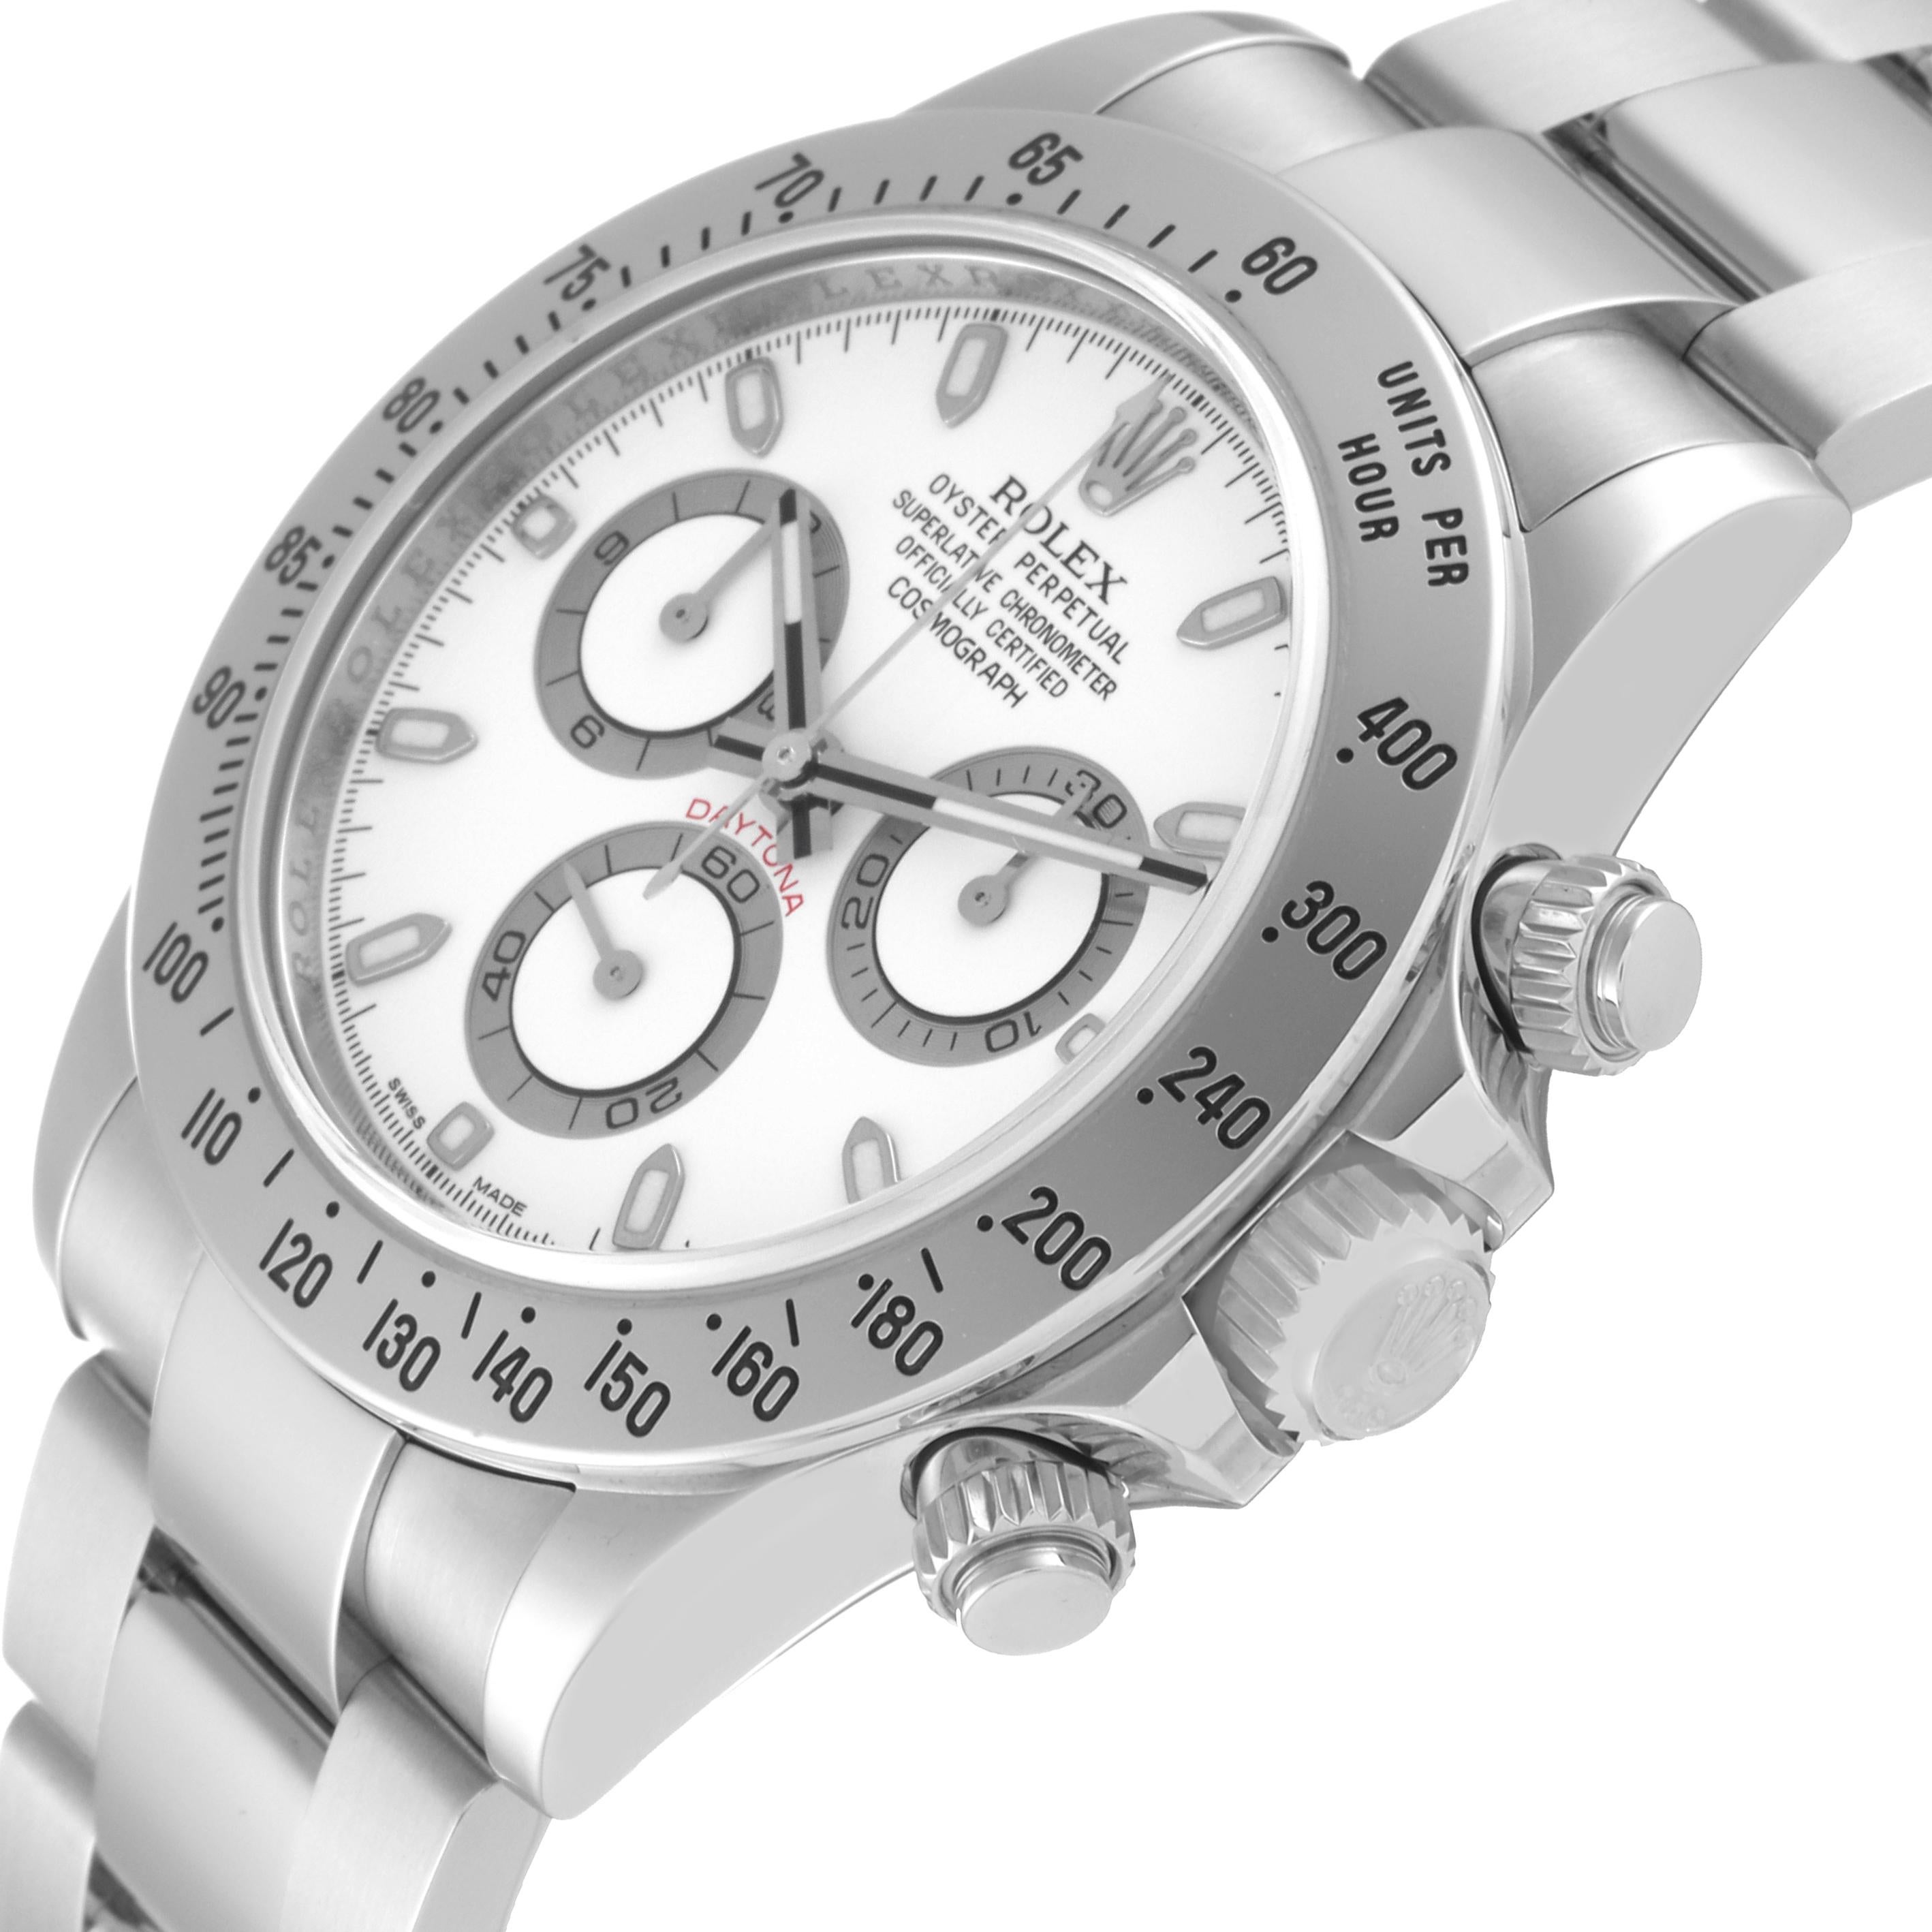 Rolex Daytona White Dial Chronograph Steel Mens Watch 116520 1